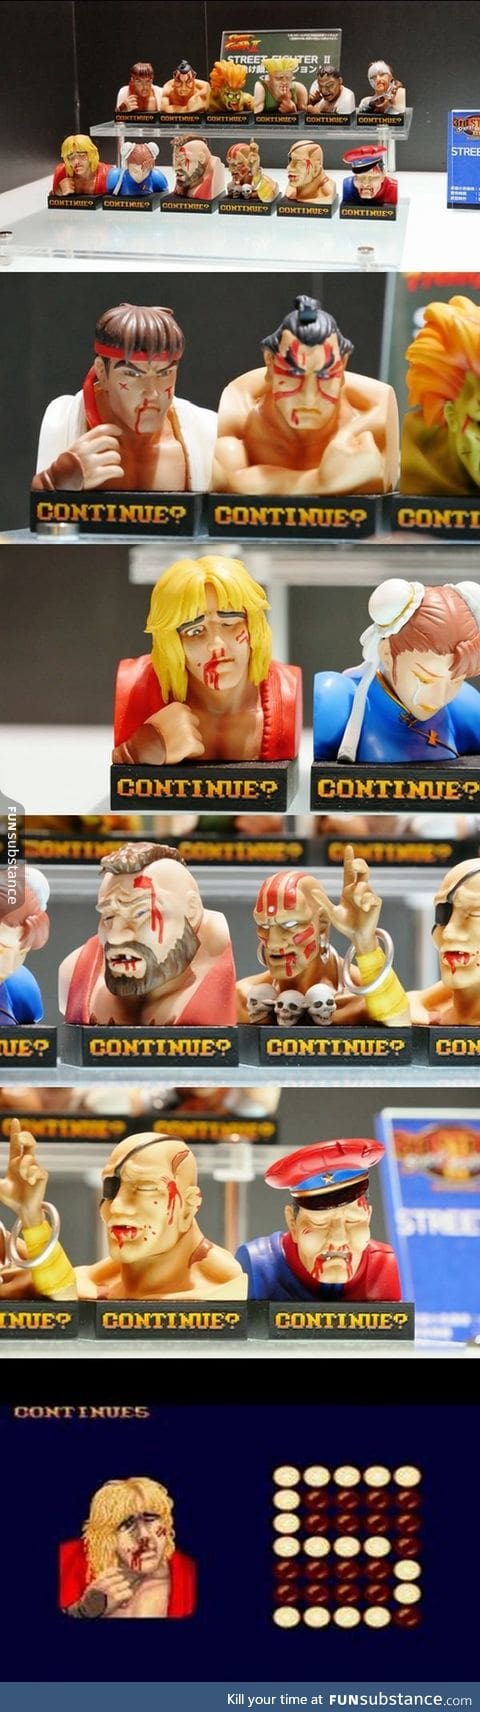 Cool Street Fighter figures